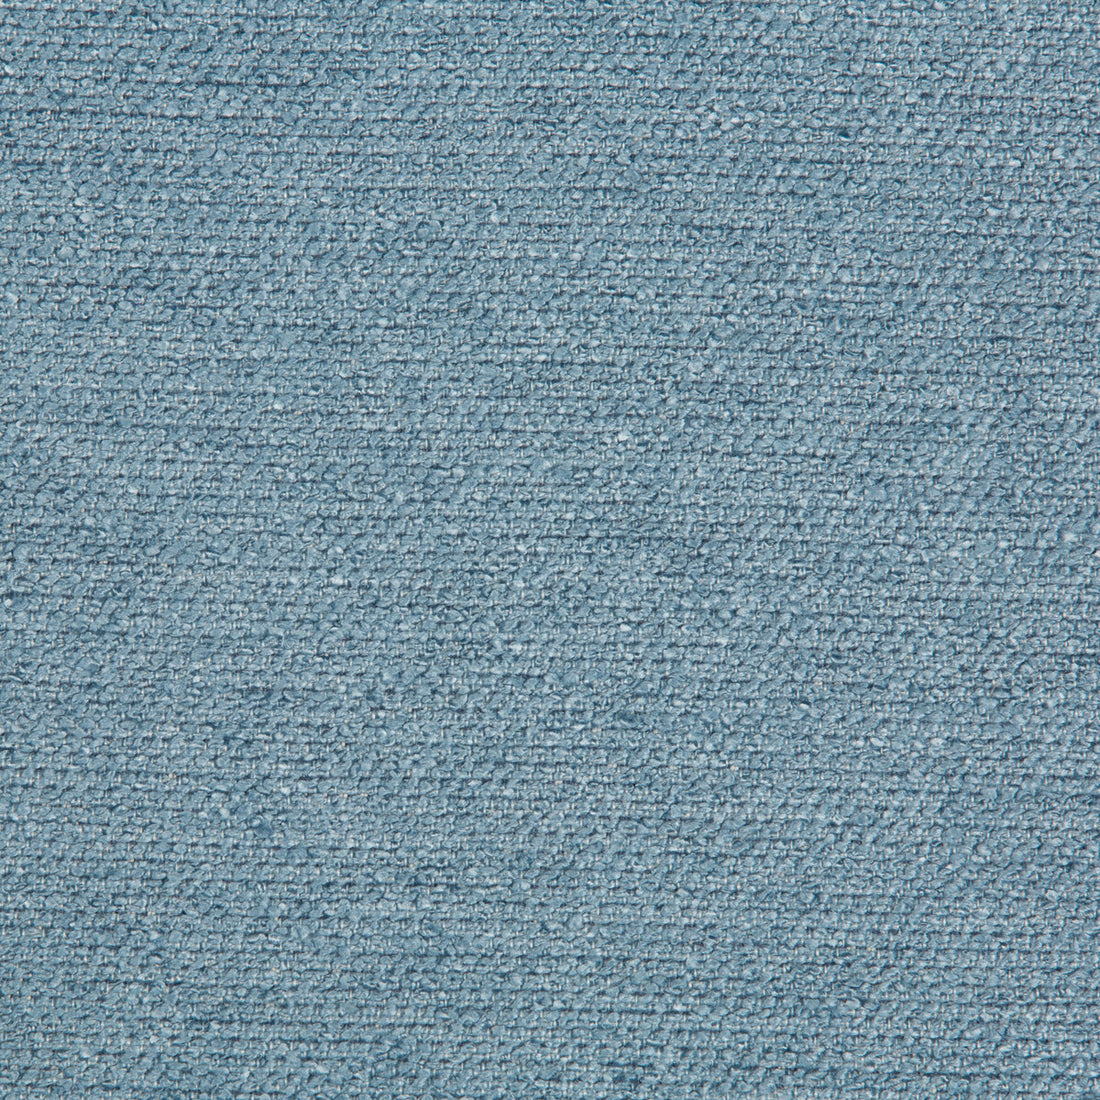 Kravet Design fabric in 34667-5 color - pattern 34667.5.0 - by Kravet Design in the Gis collection